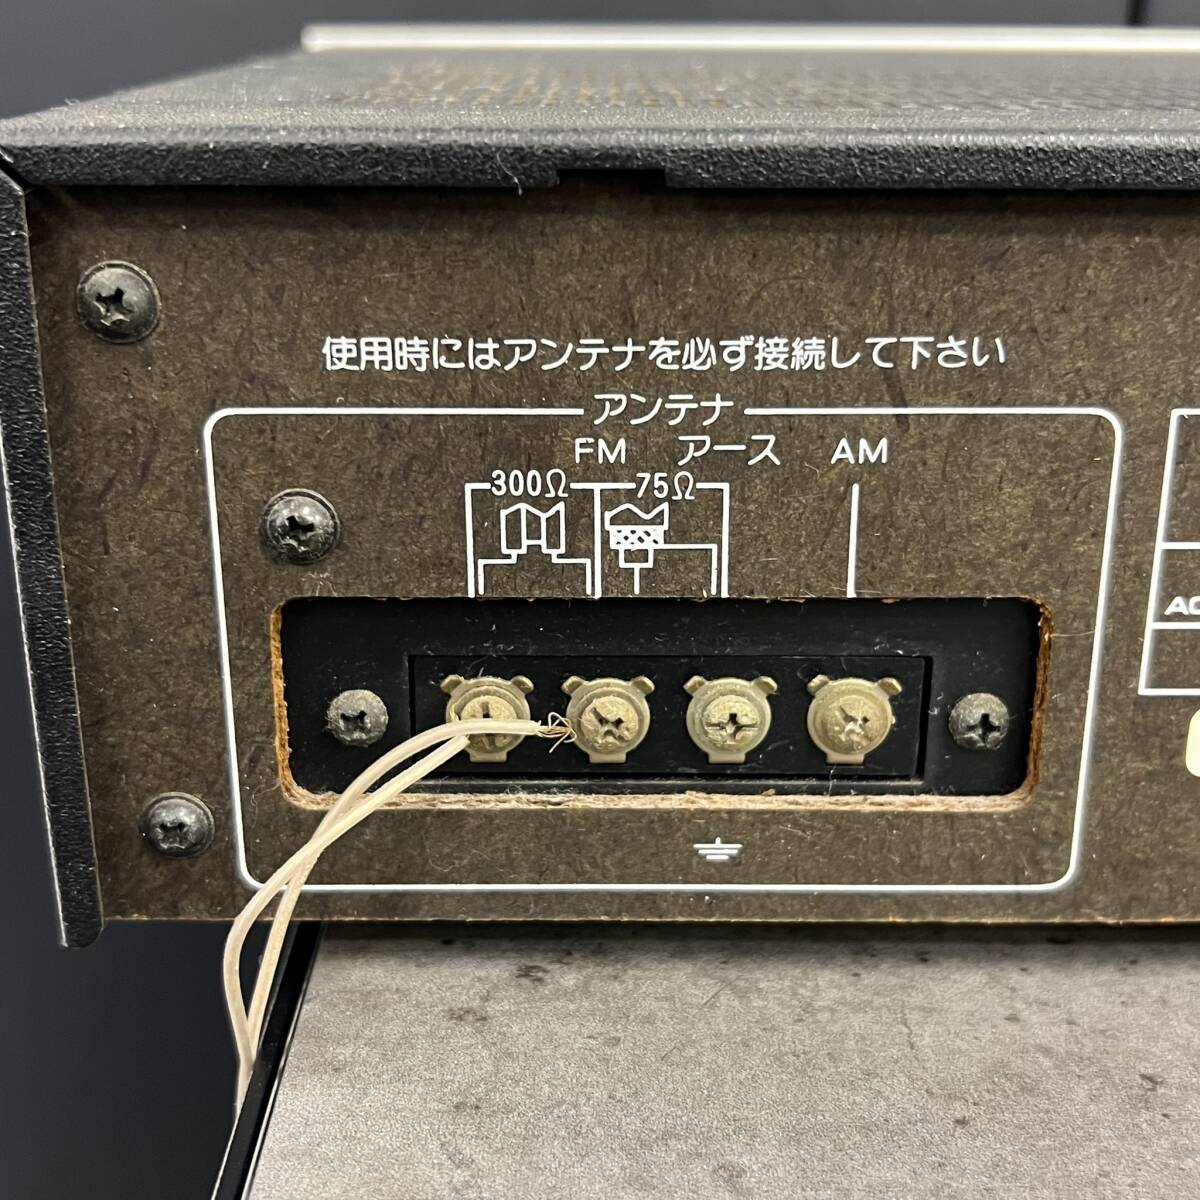 1000 иен старт [ электризация OK]PIONEER Pioneer FM/AM стерео тюнер радио звуковая аппаратура TX-5000 б/у 